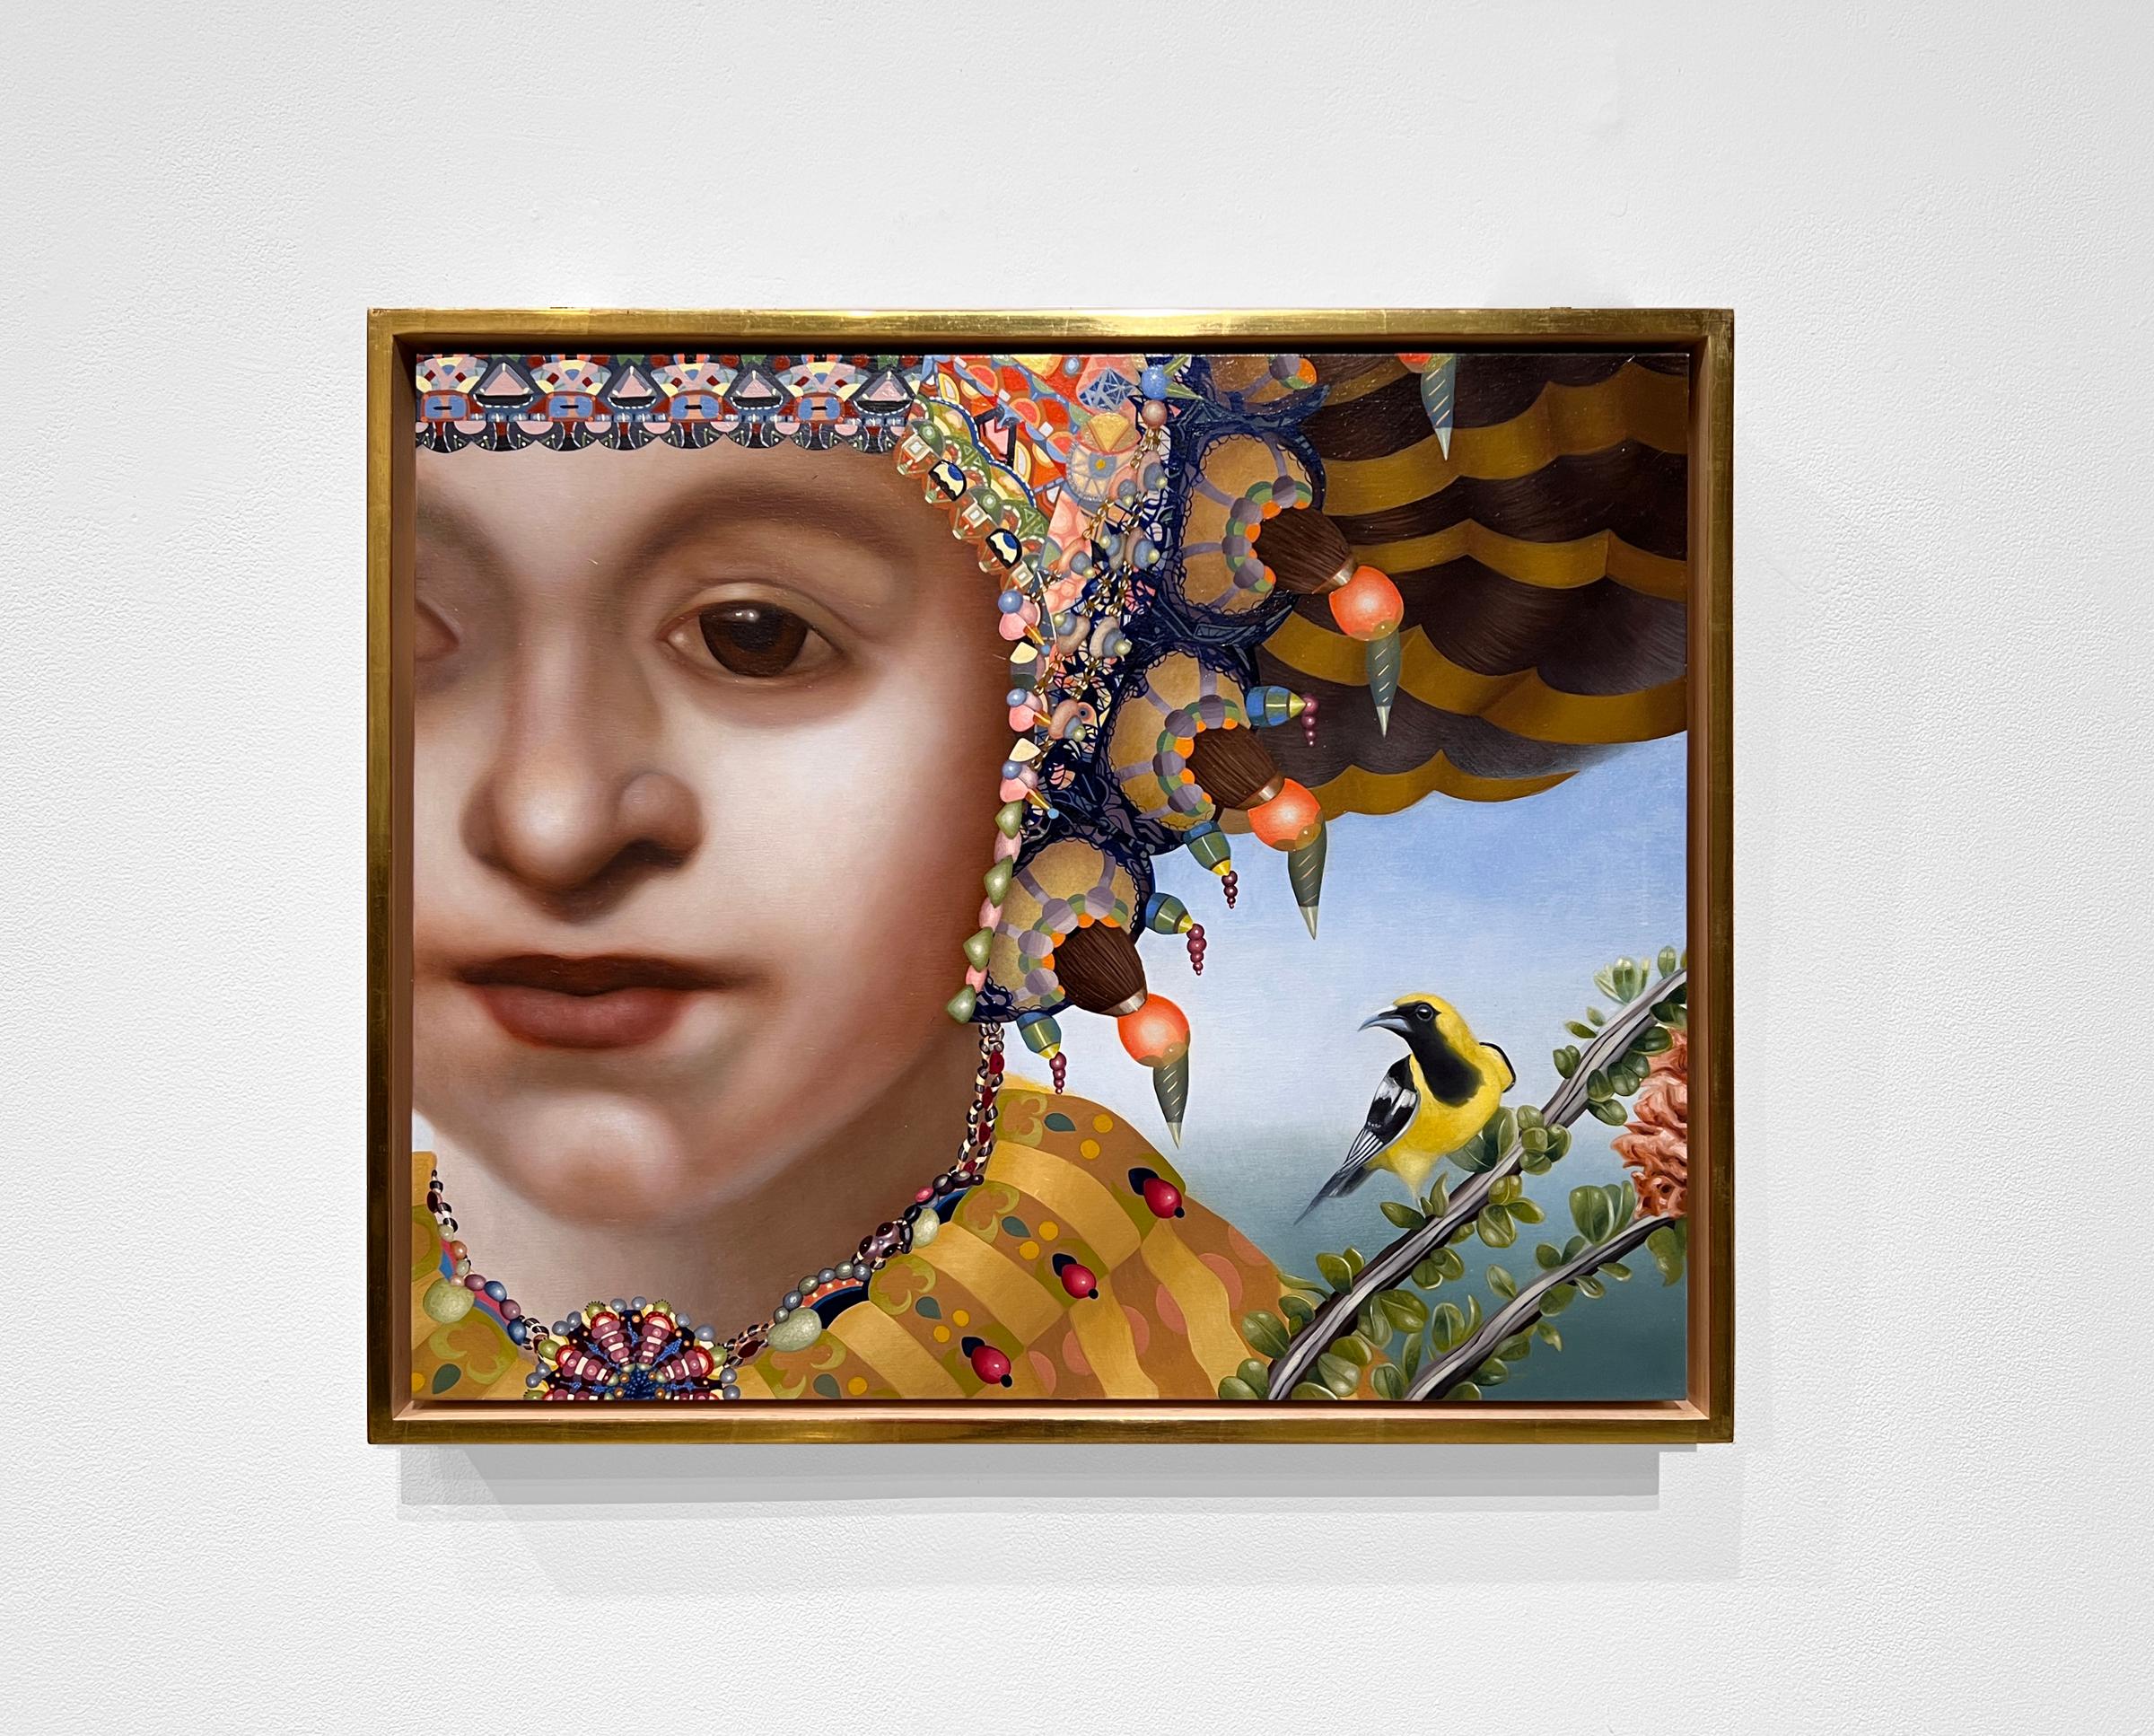 WOMAN 26, VENEZUELAN TURPIAL - Contemporary Realism / Portrait / Yellow Bird - Painting by Jacob Hicks